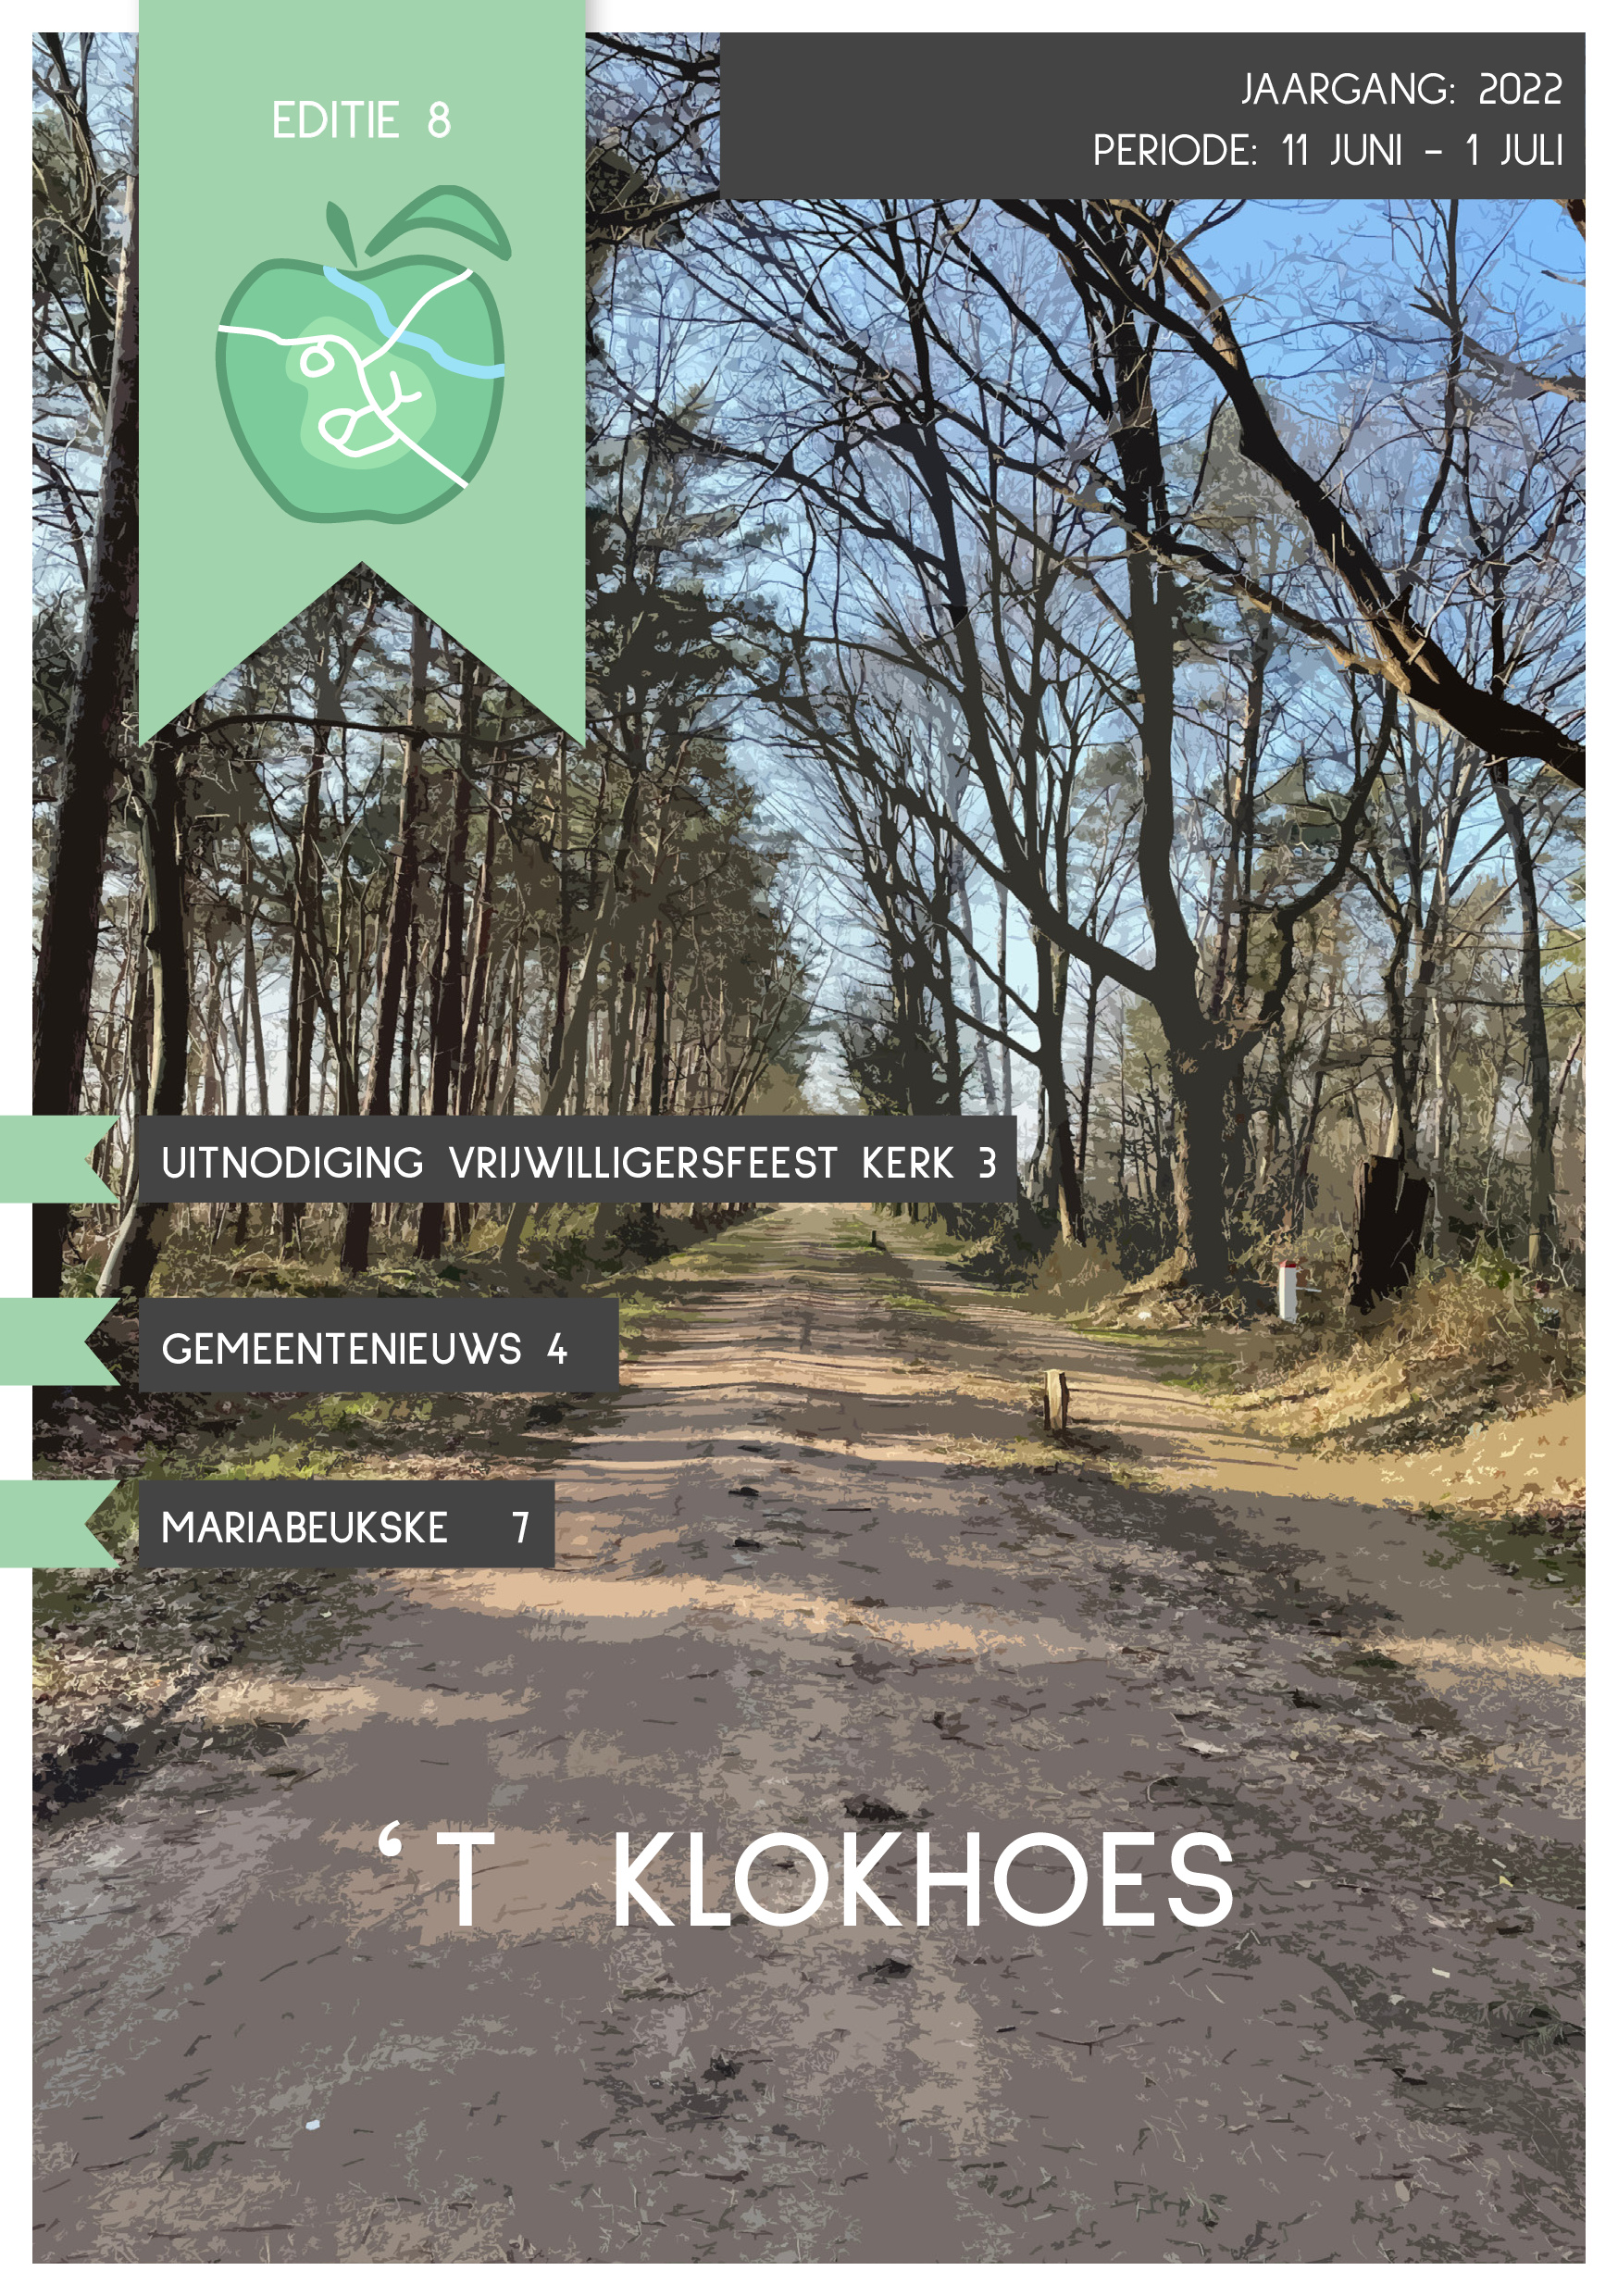 Dorpsblad 't Klokhoes editie 8, 2022